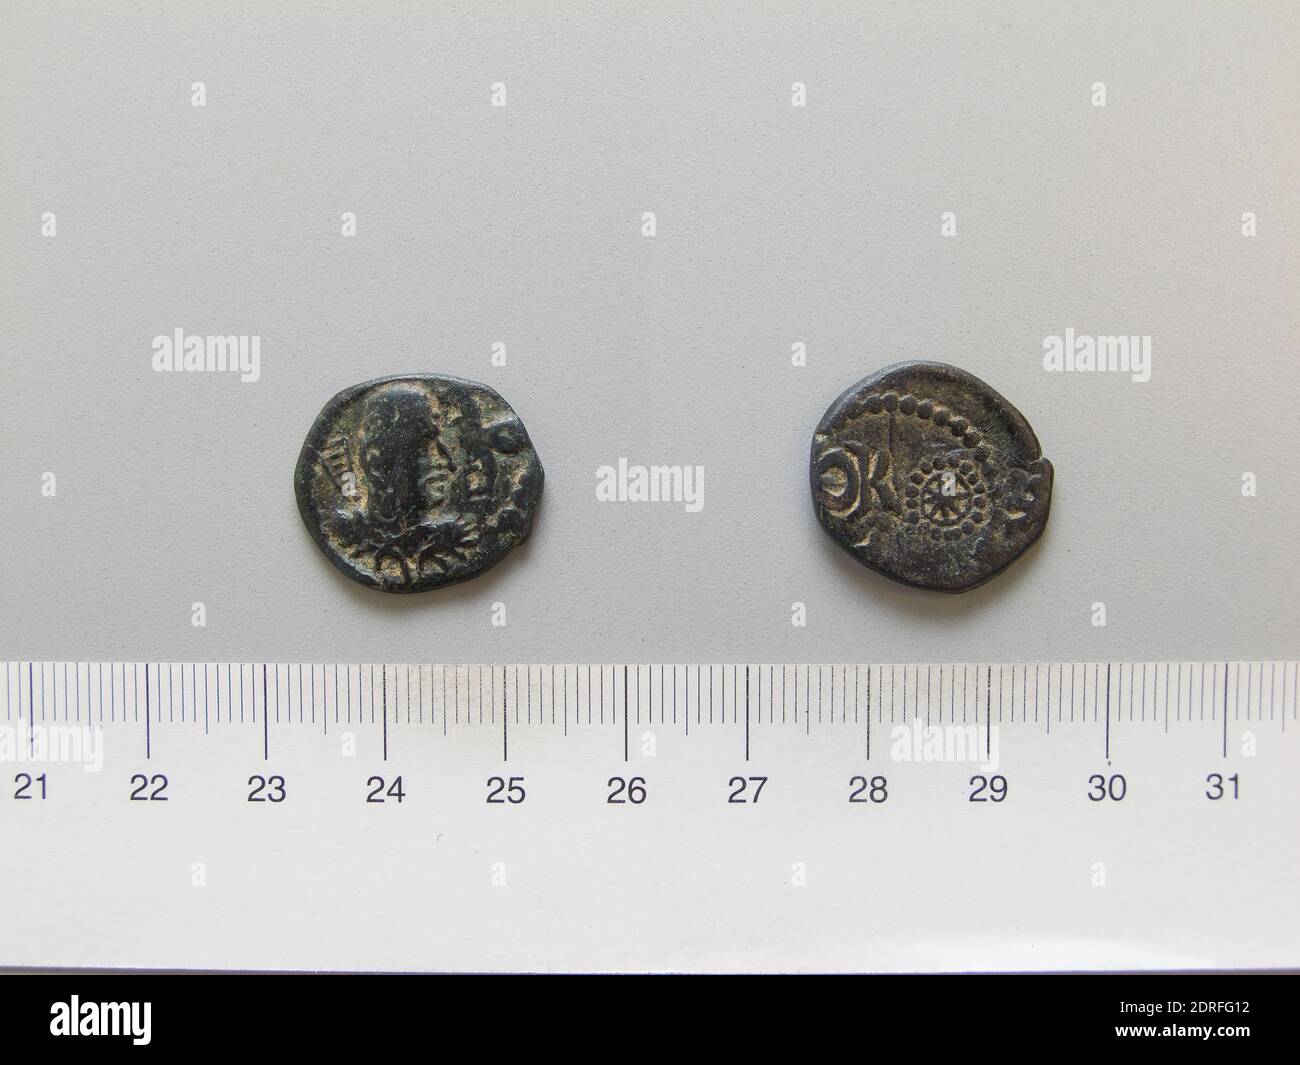 Mint: Toramana, Coin from Toramana, ca. A.D. 500, Copper, 4.39 g, 3:00, 20.70 mm, Made in Toramana, Greek, 5th–6th century A.D., Numismatics Stock Photo